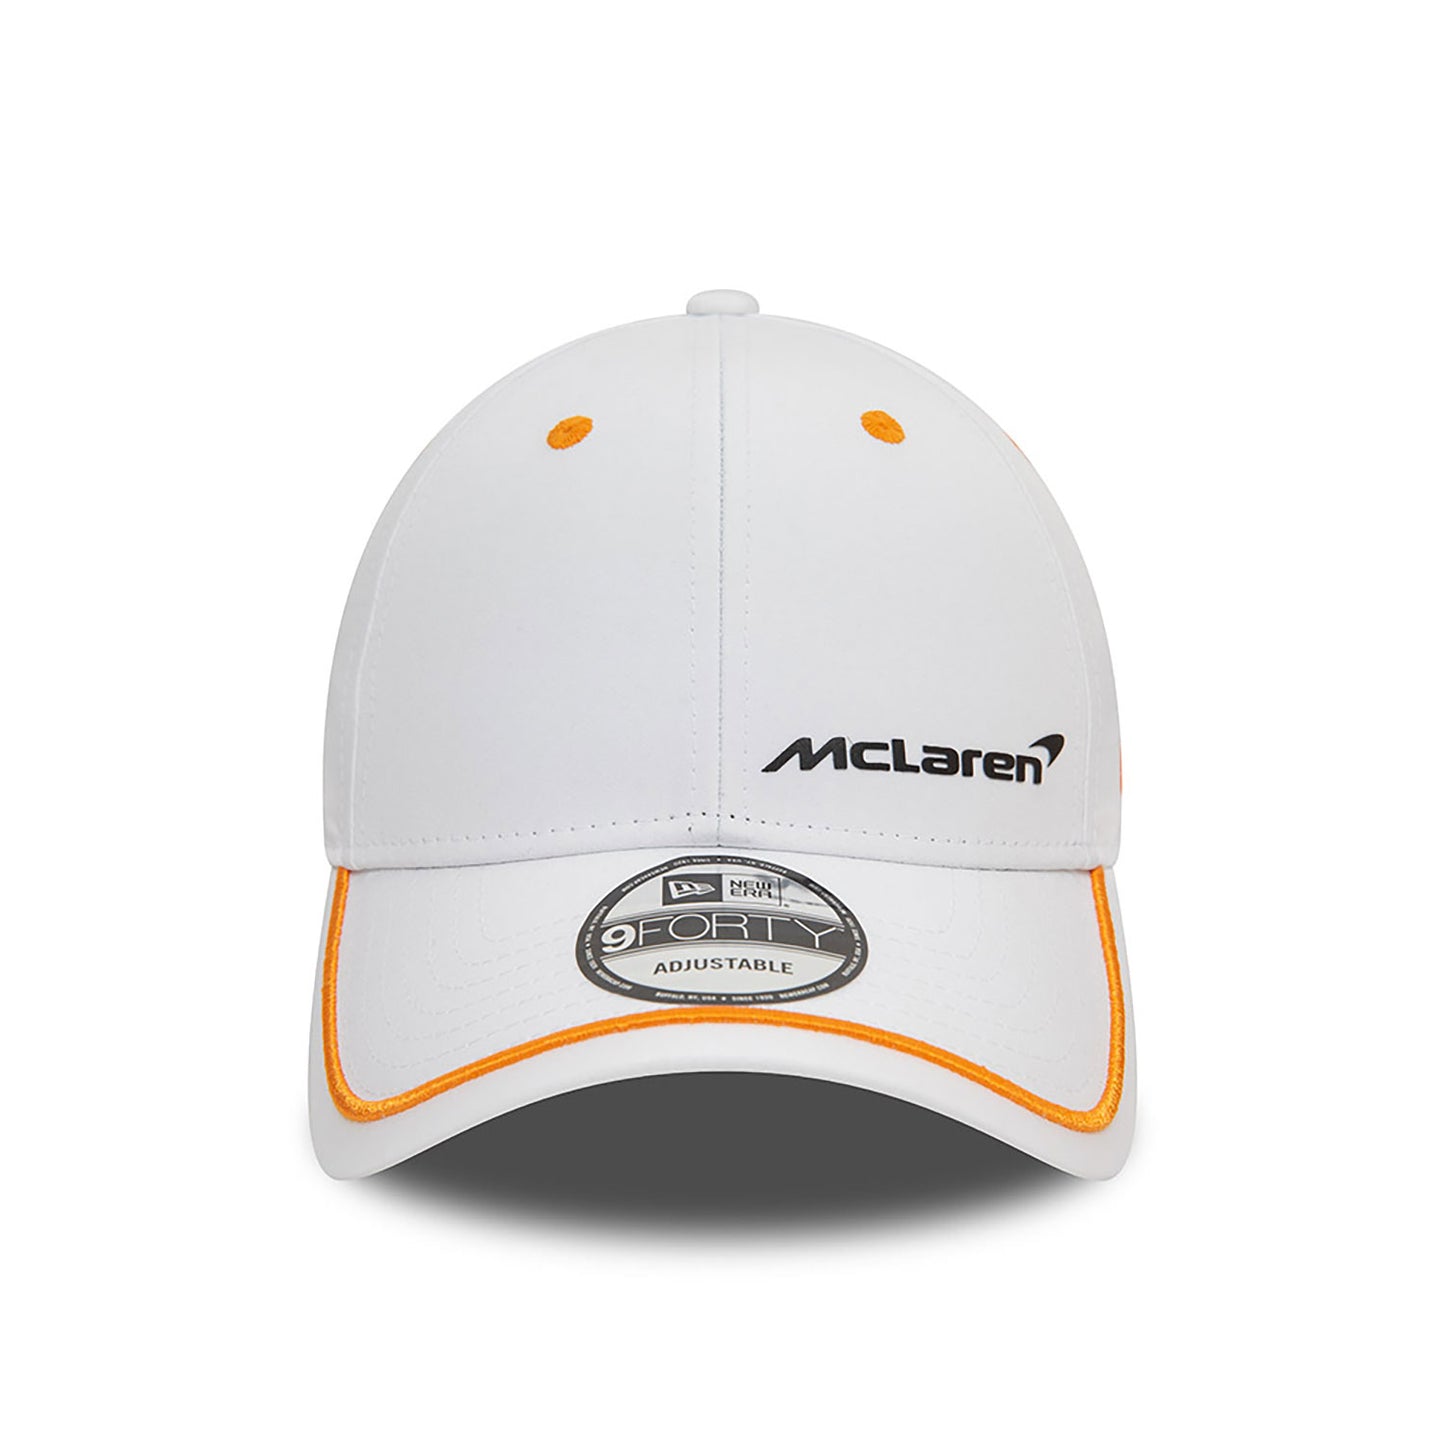 New Era Şapka - McLaren Automotive Kontrast Beyaz 9FORTY Ayarlanabilir Şapka